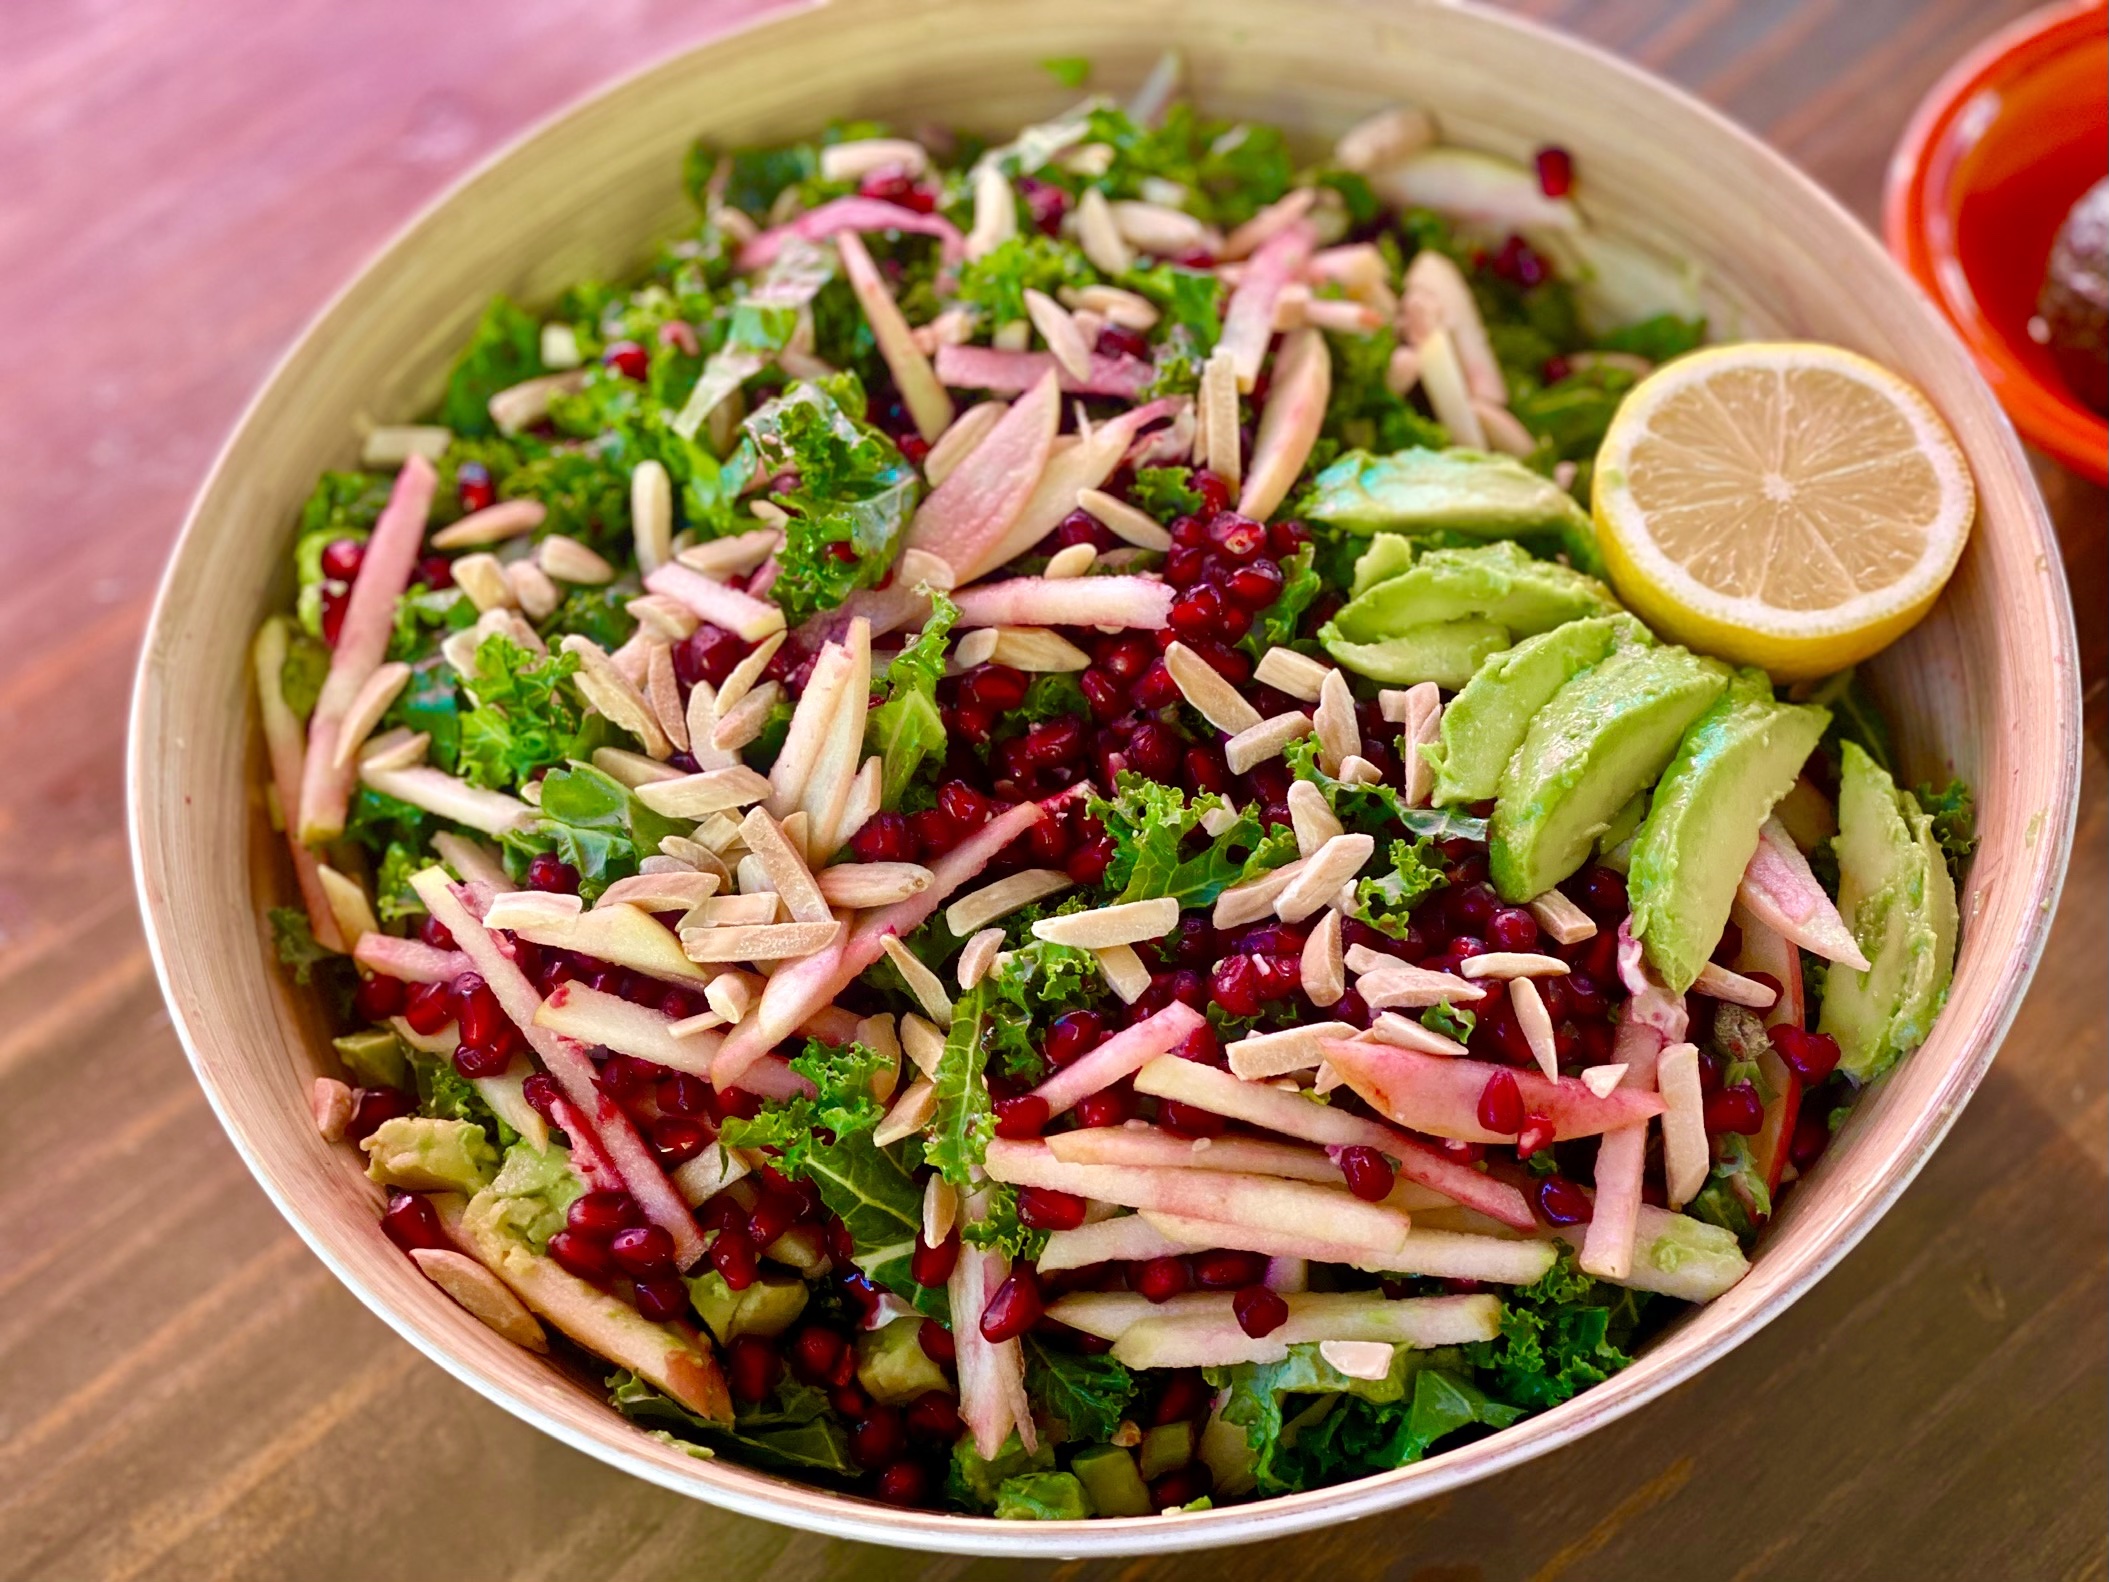 A stylized photograph of a Festive Kale Salad